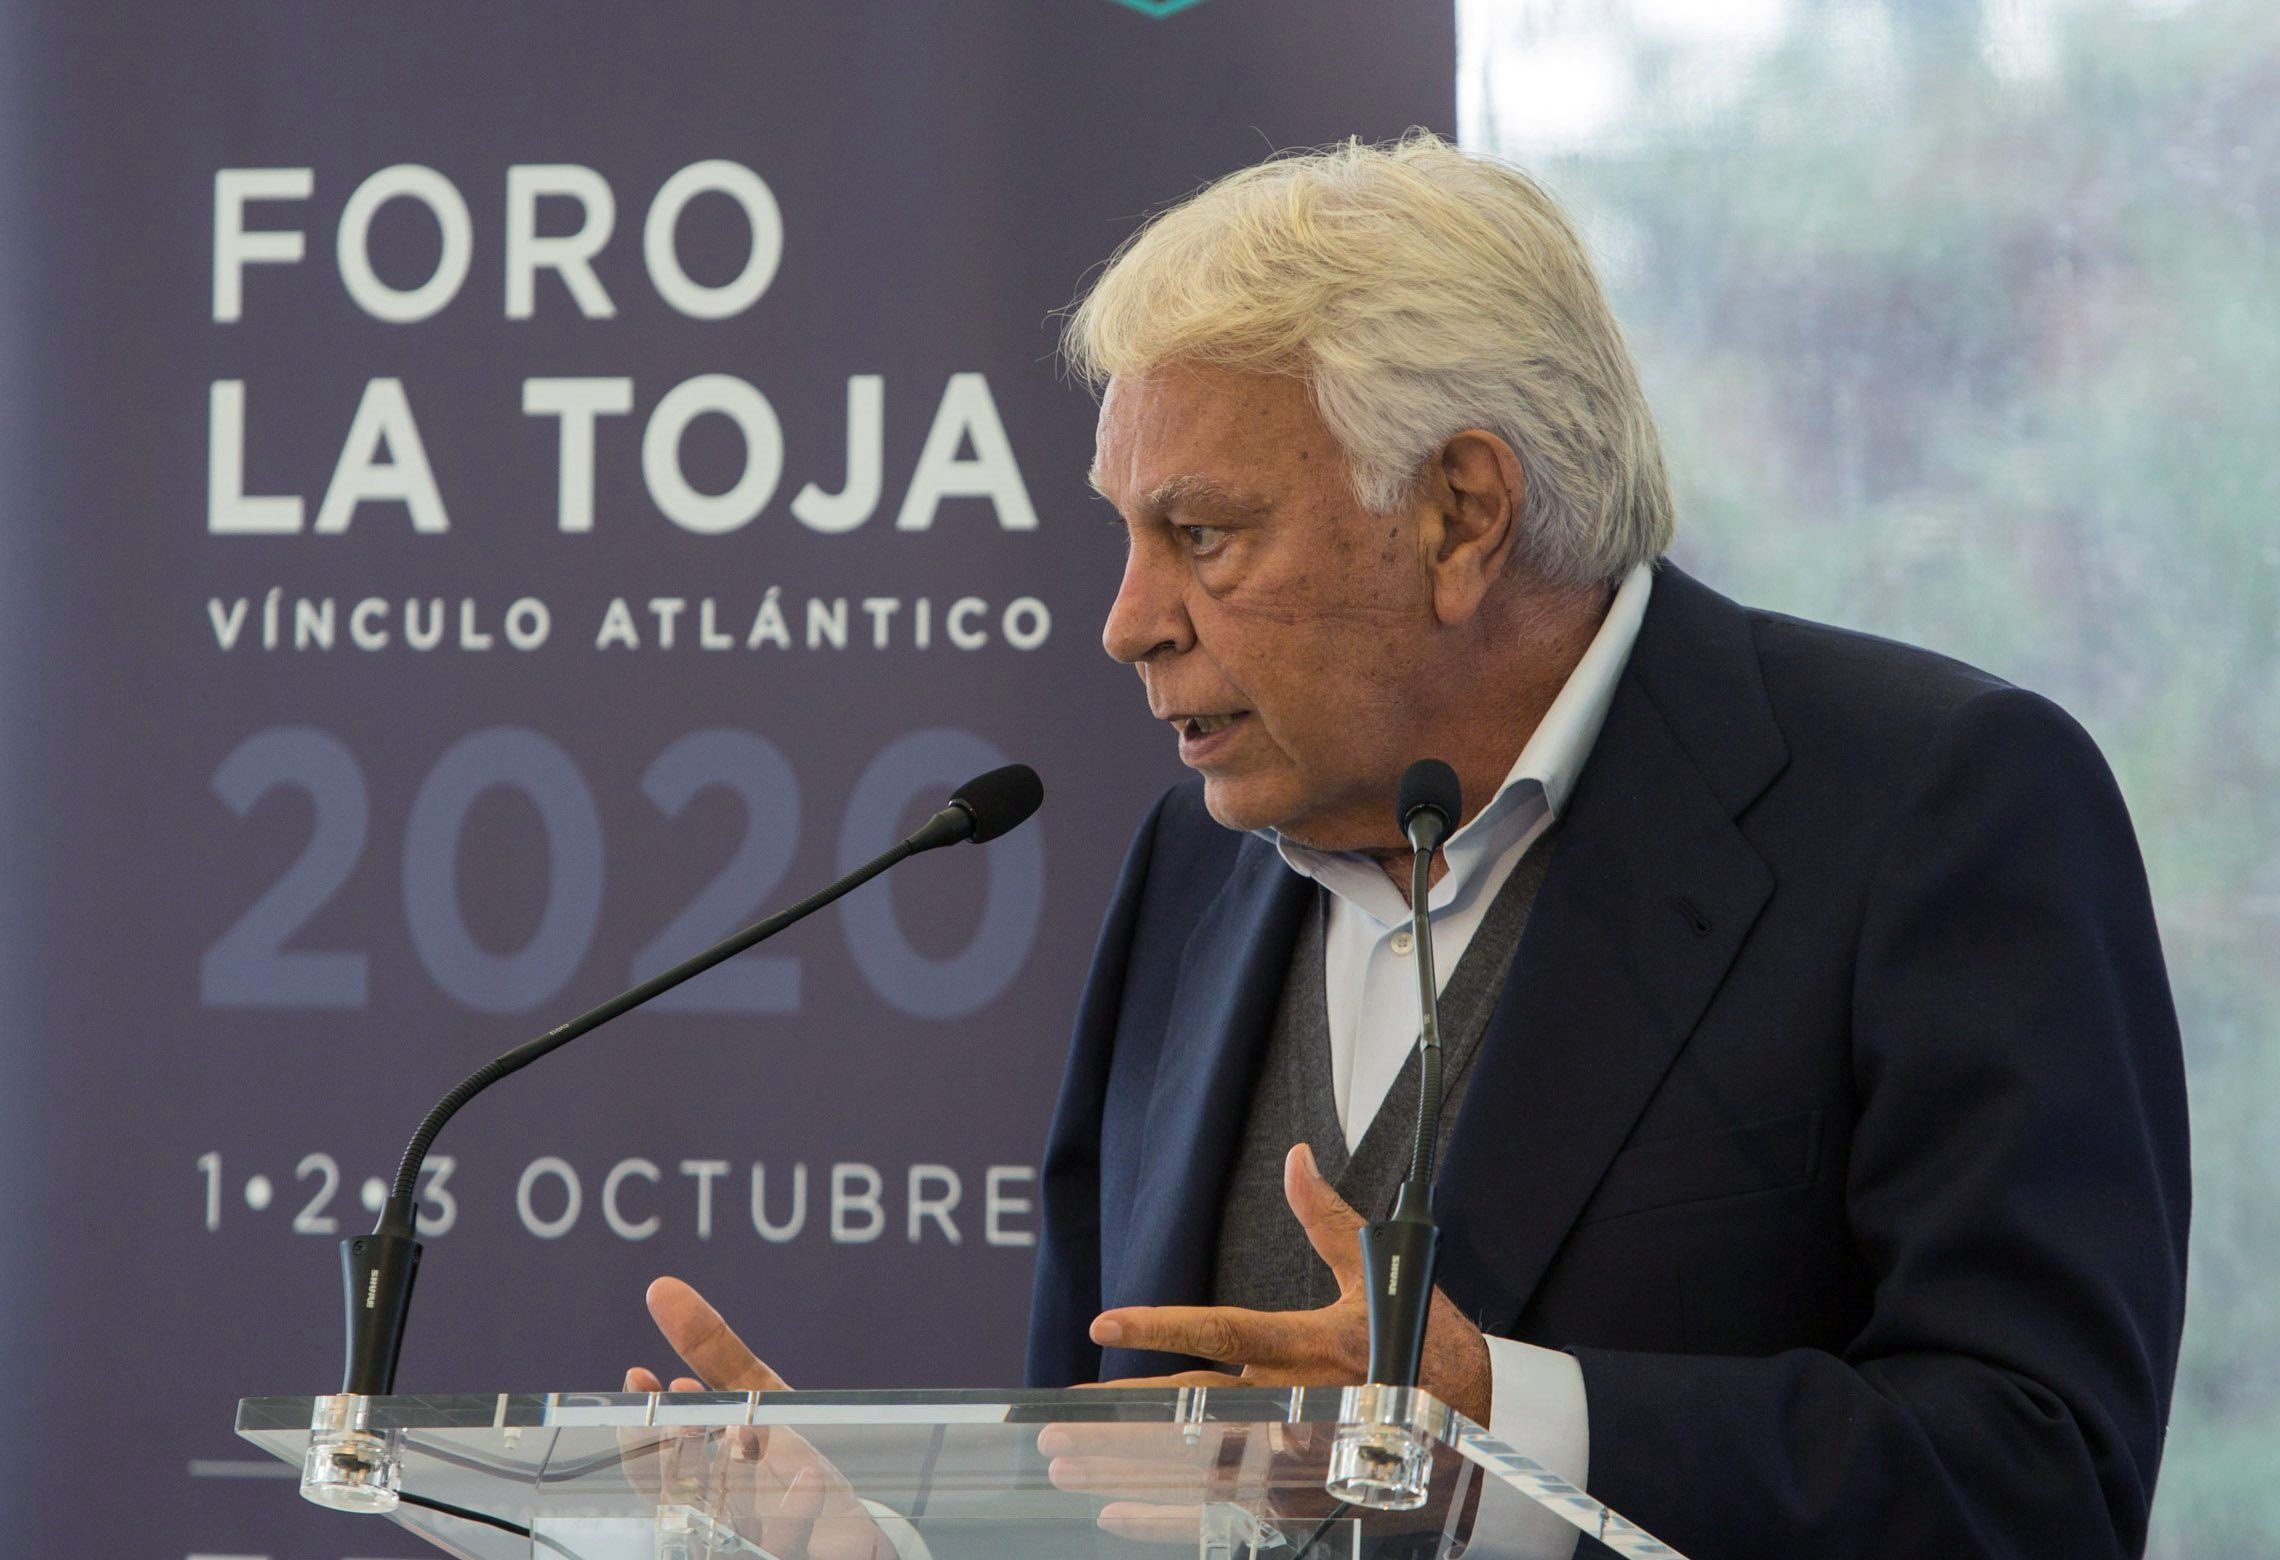 Felipe González contra Salvador Illa: "Això sembla un punyeter govern de taifes"